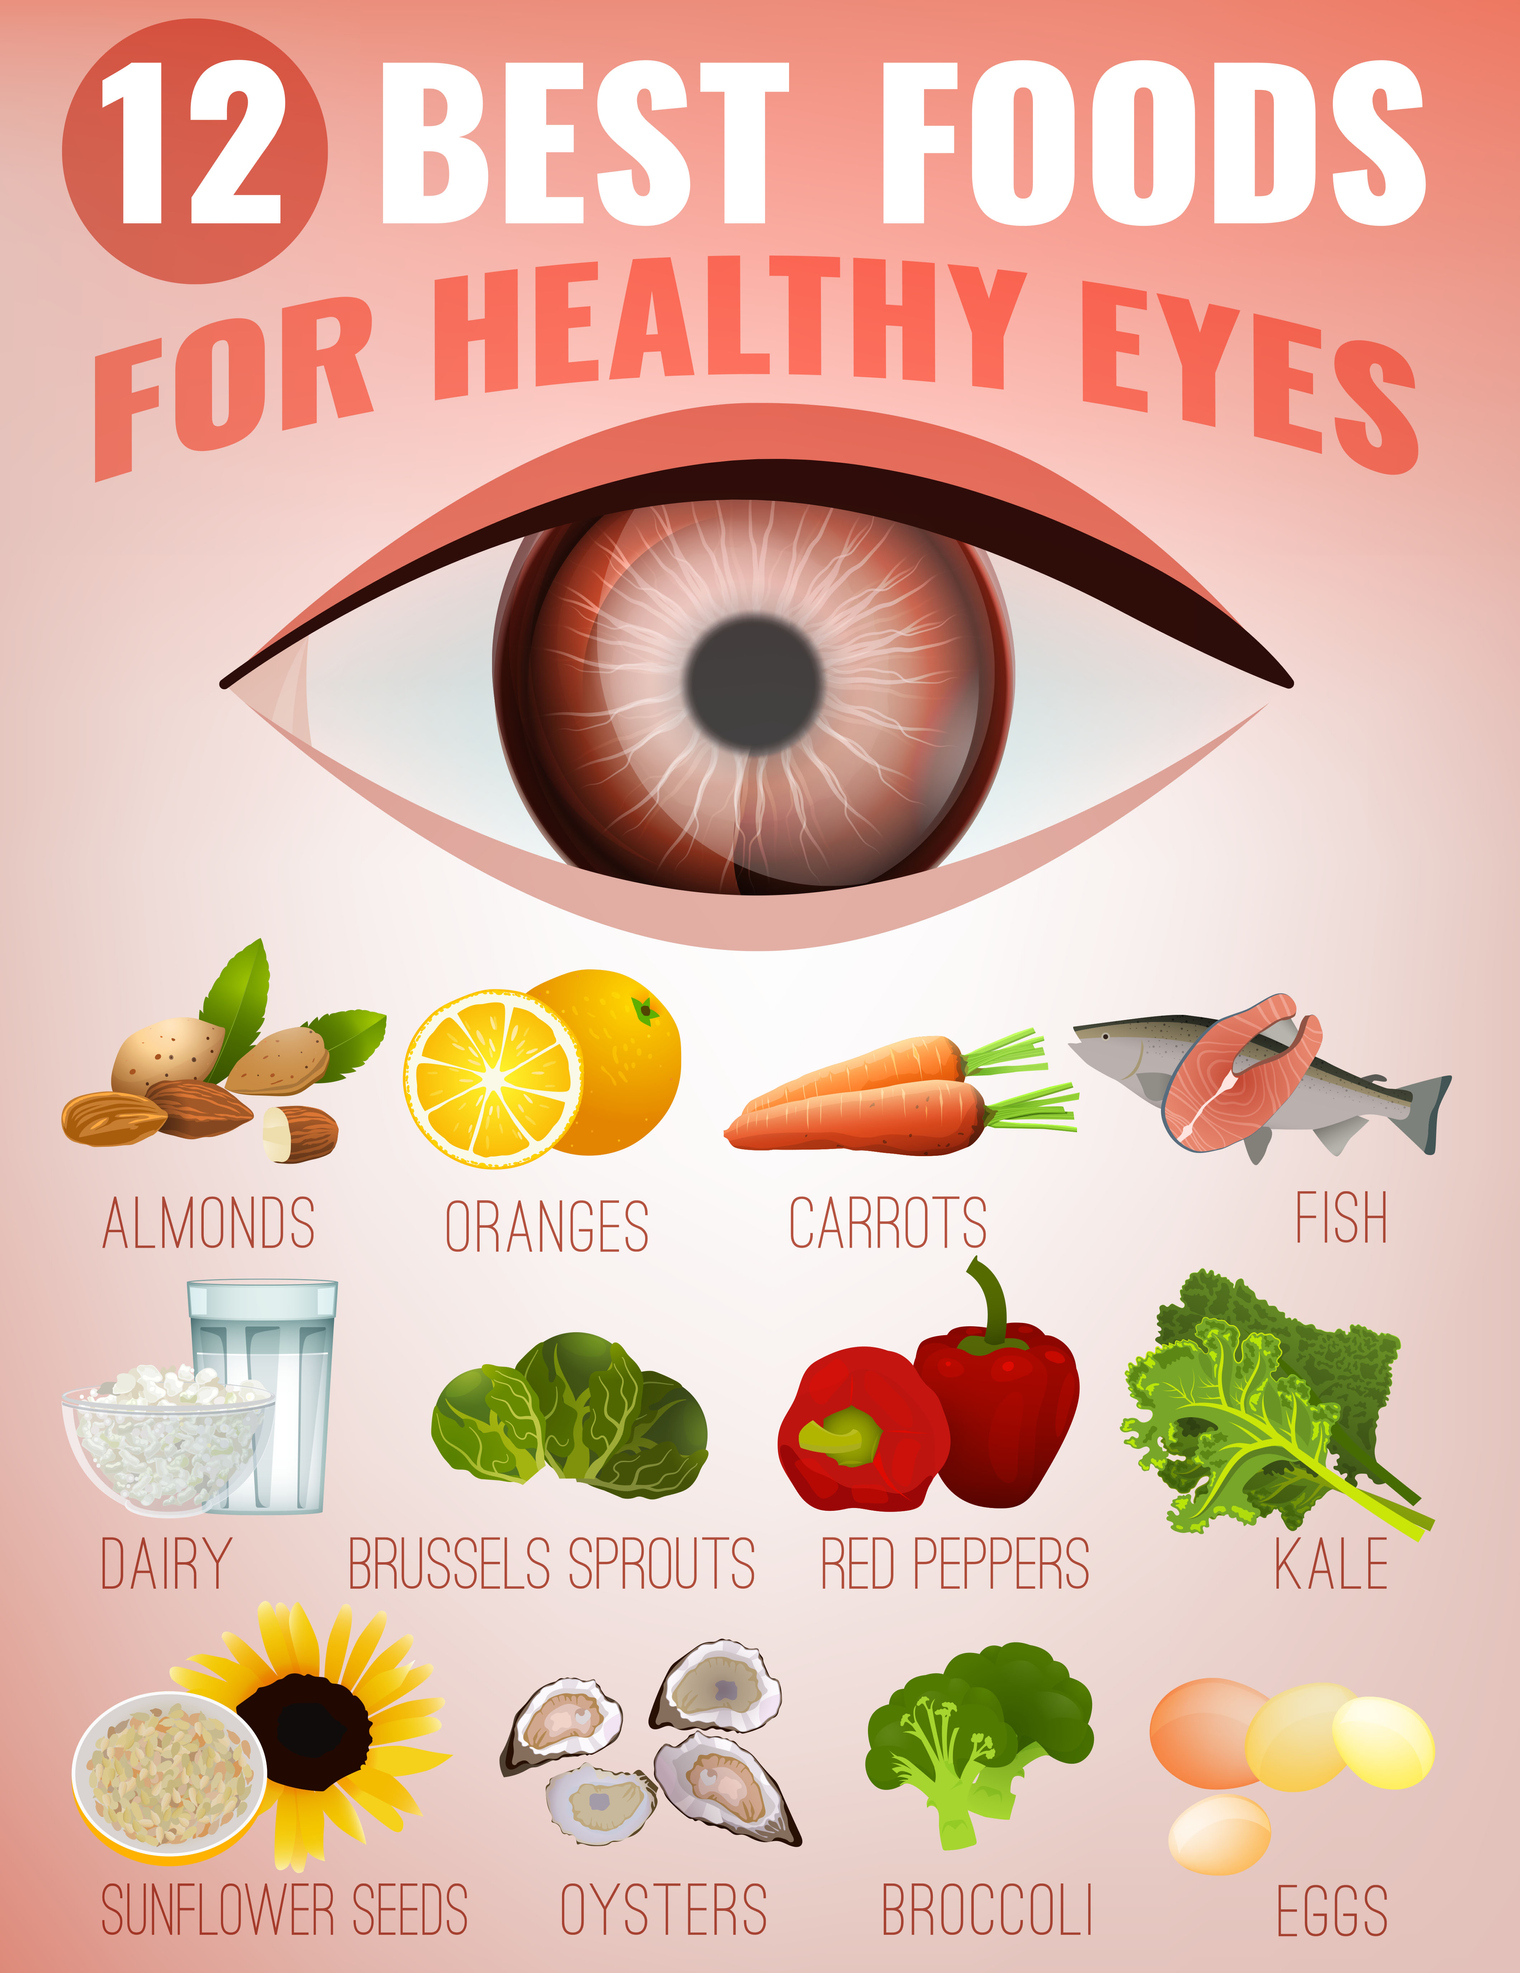 Eye-Friendly Nutrients: Zinc And Selenium